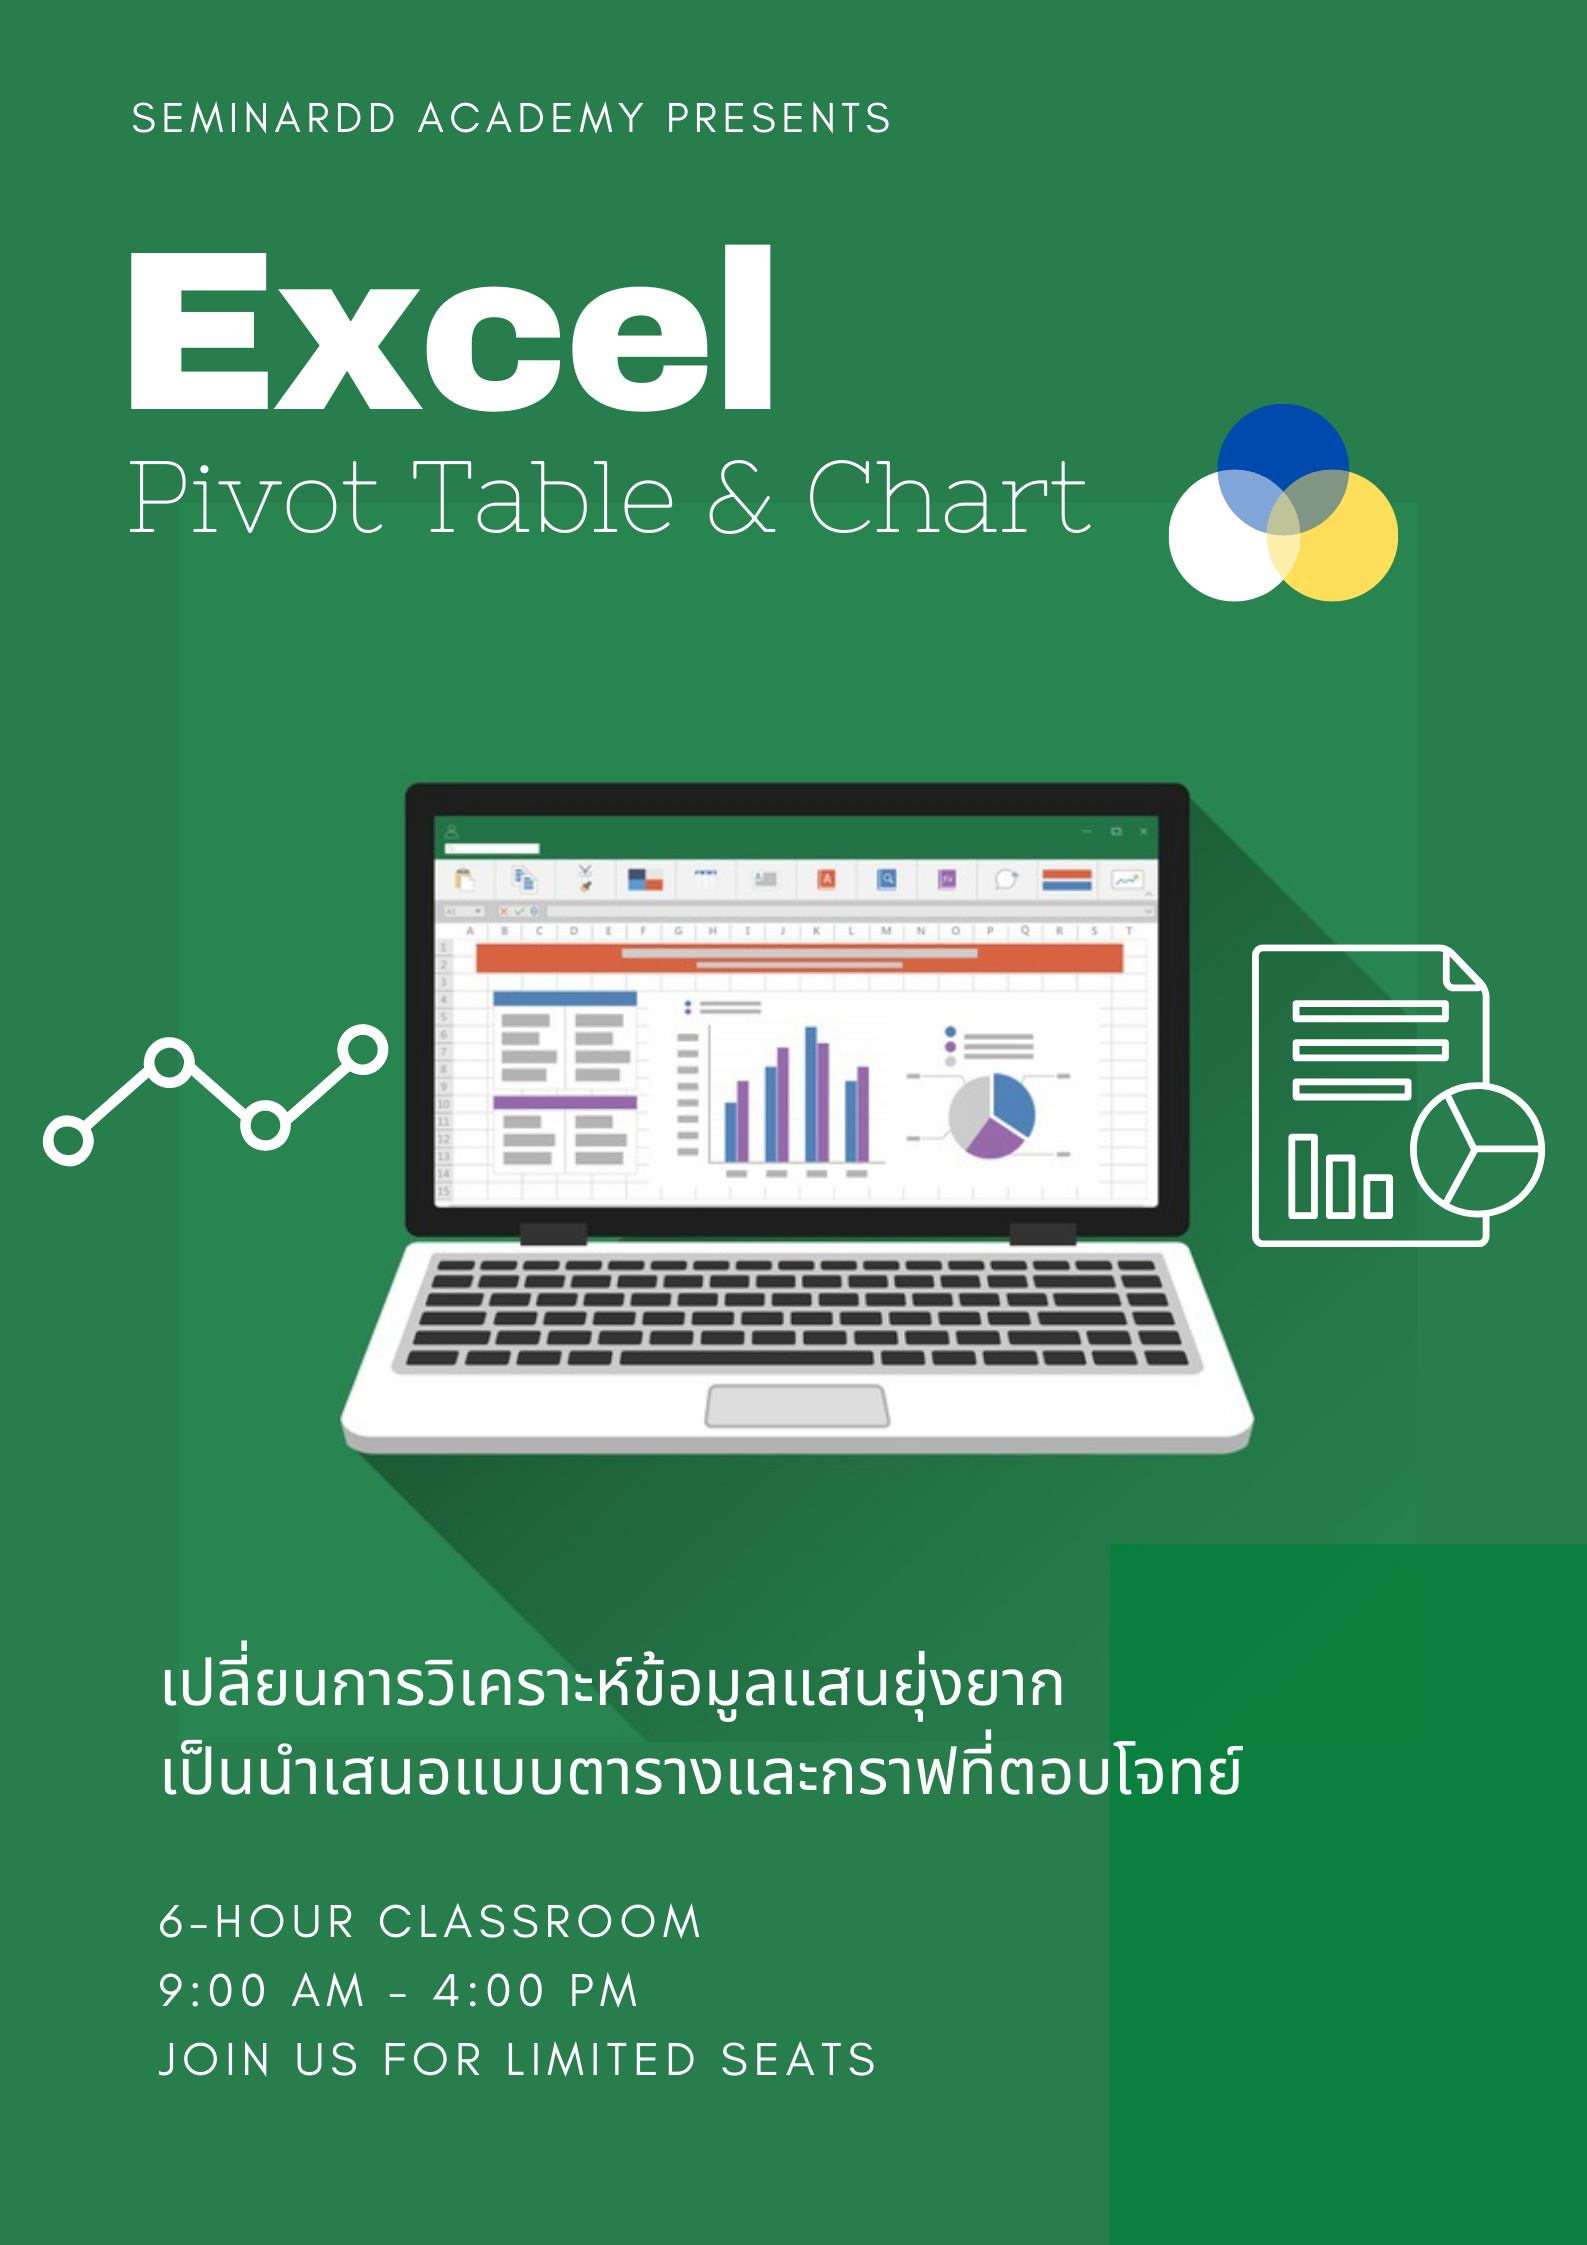 Microsoft Excel Pivot Table & Pivot Chart